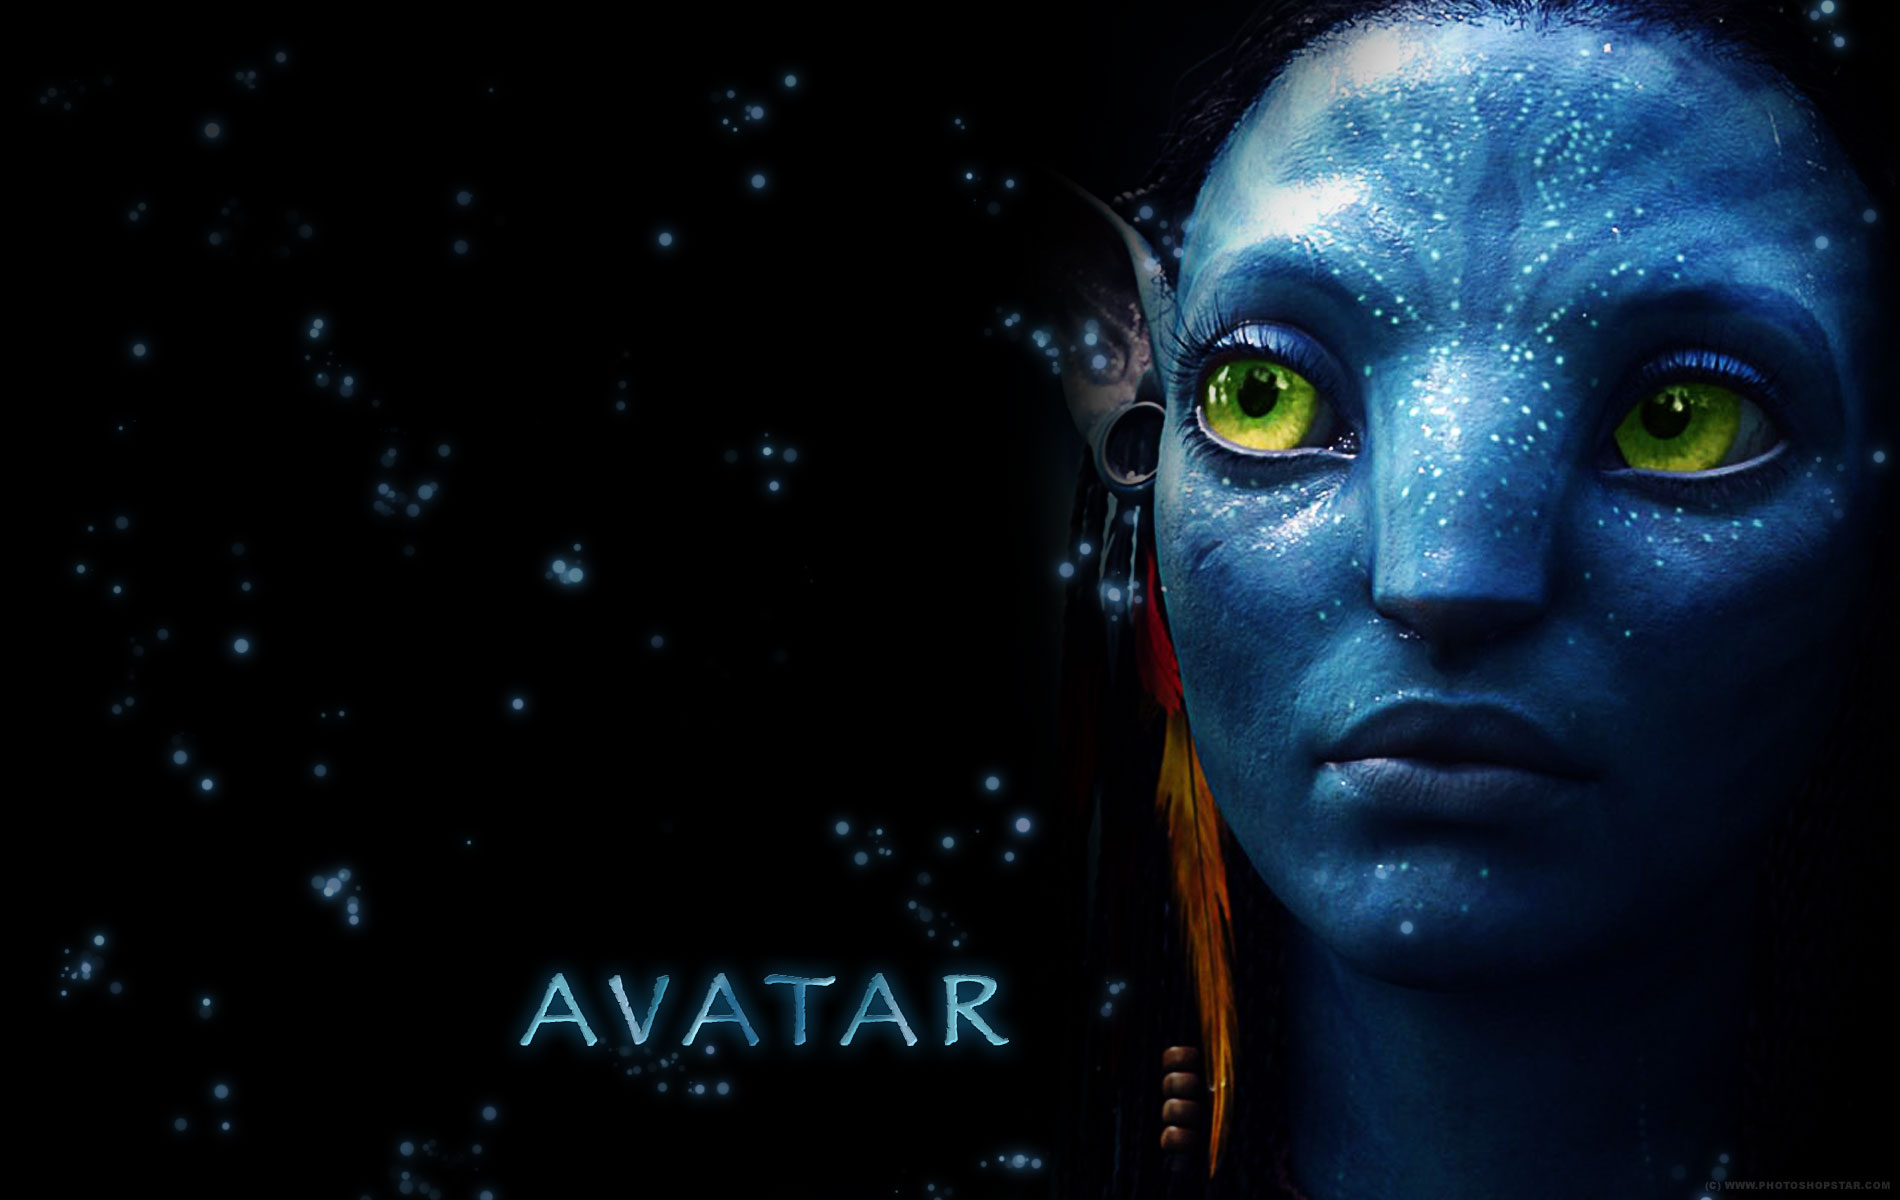 1280x1024 Avatar Movie desktop PC and Mac wallpaper